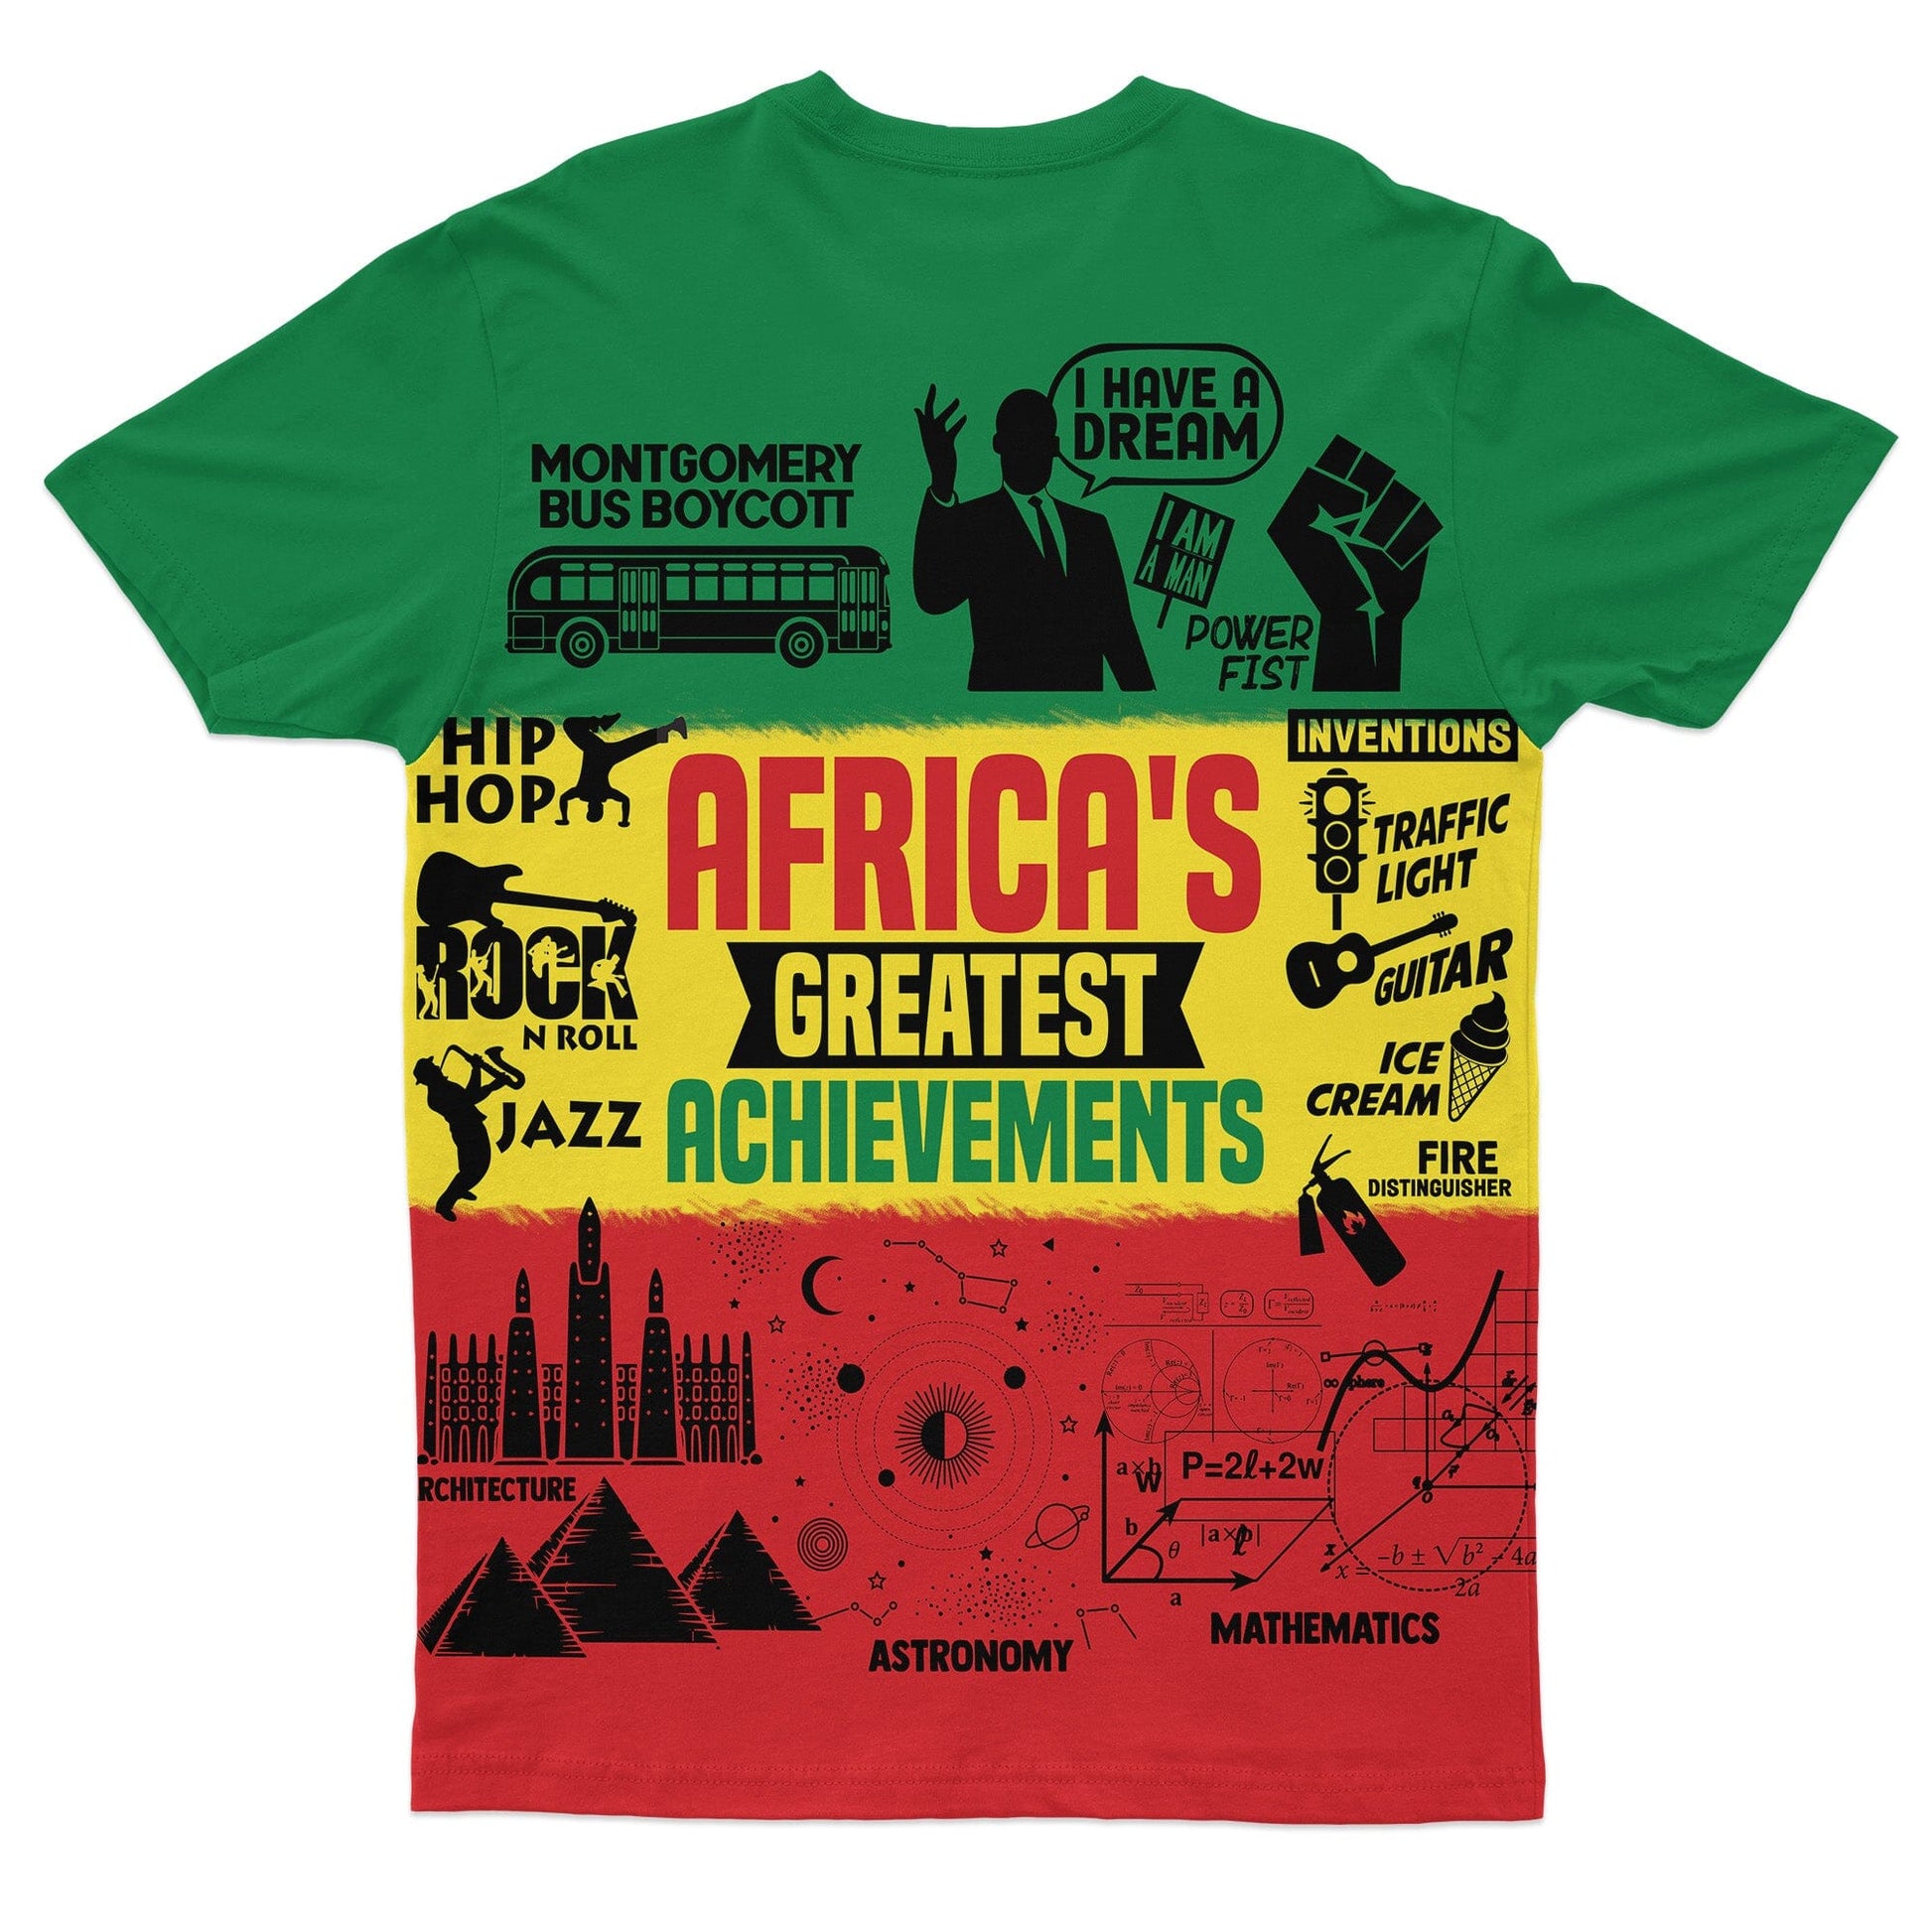 Africa's Greatest Achievements T-Shirt AOP Tee Tianci 